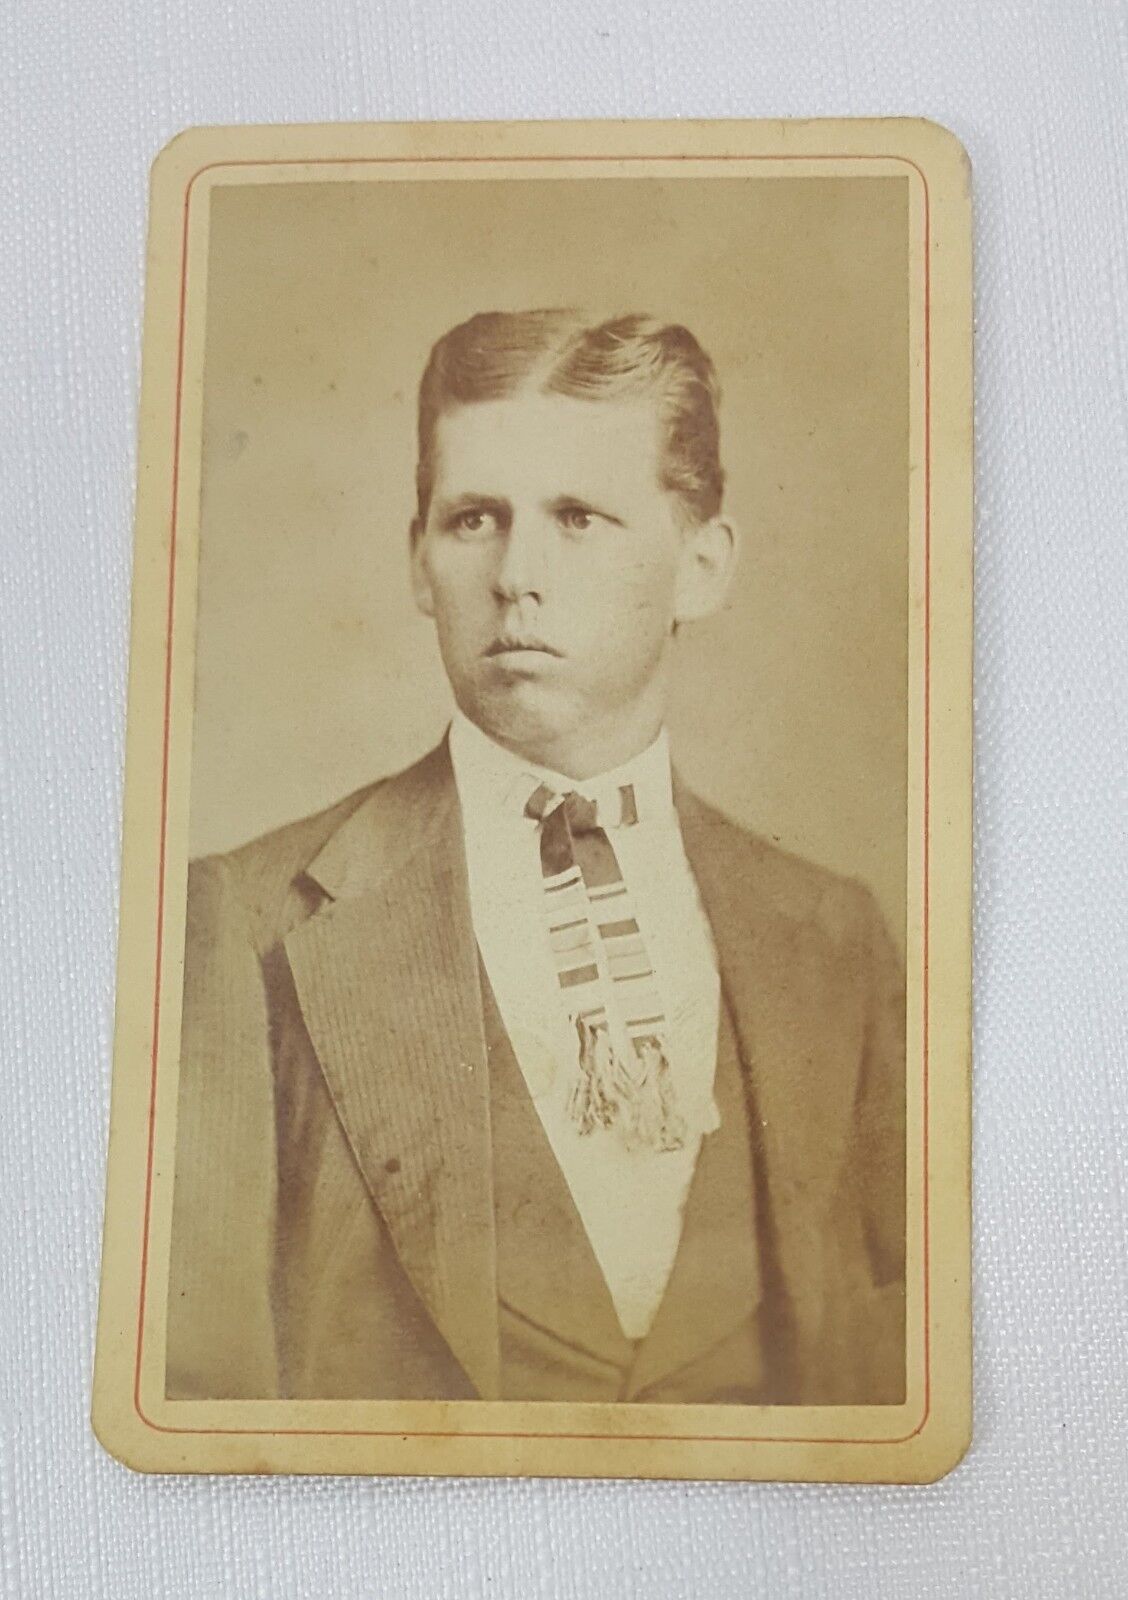 Cabinet Card Photo Portrait Victorian Man in suit necktie parted hair